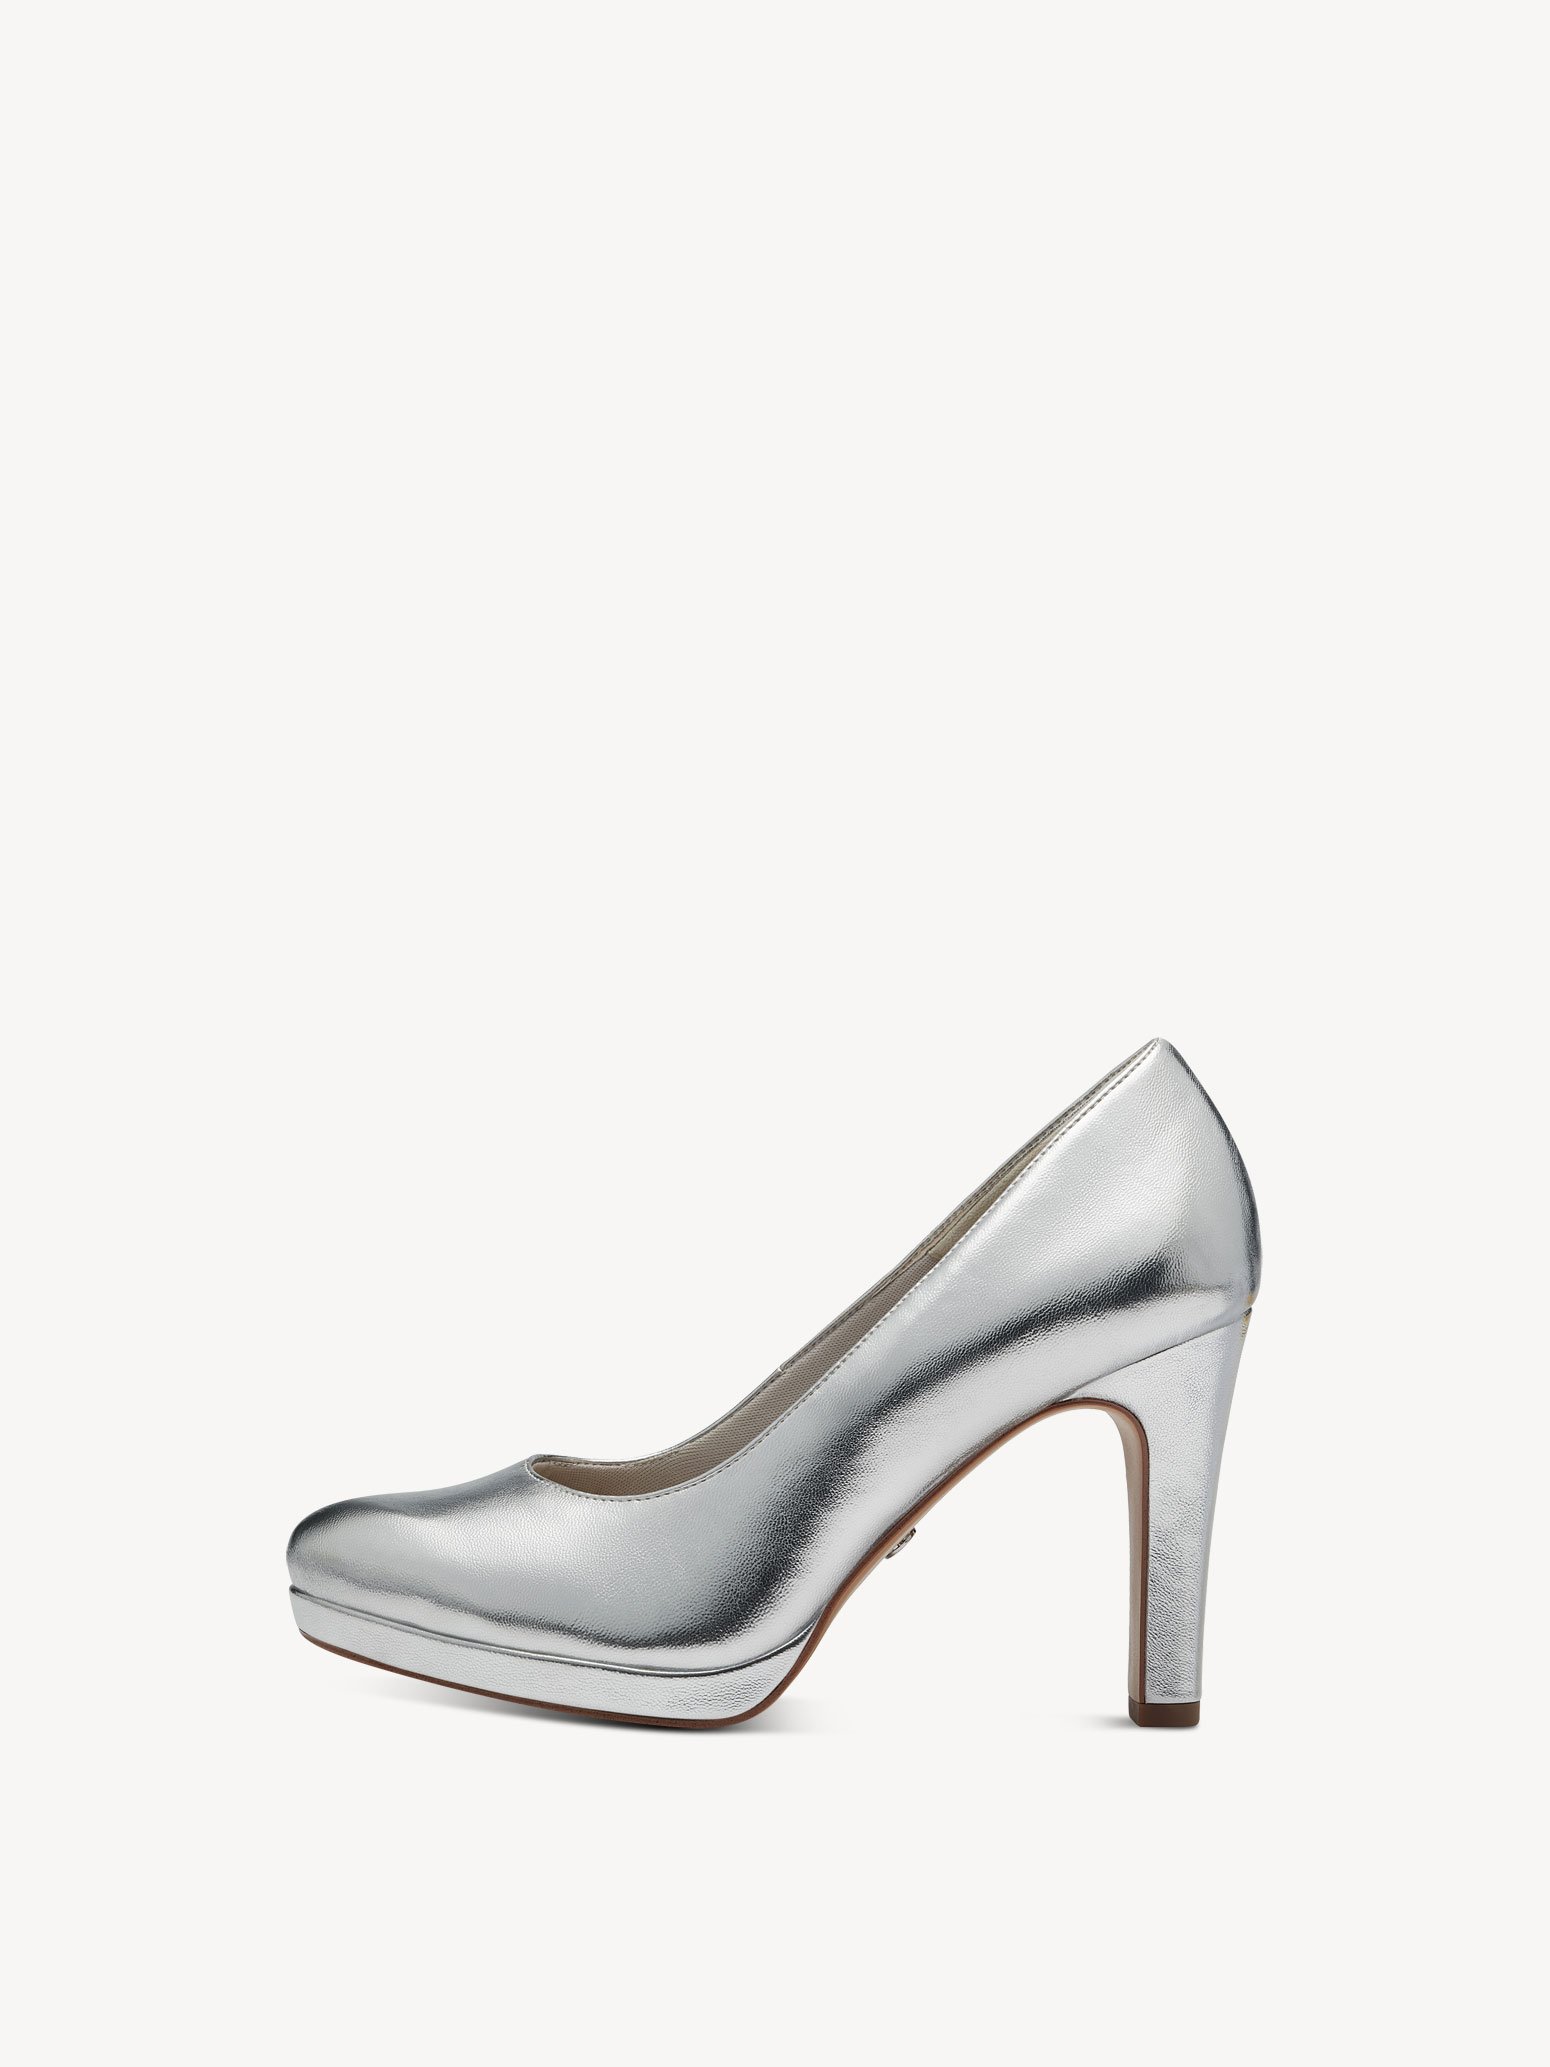 Pumps - silver 1-22426-41-941: Buy Tamaris High heels online!